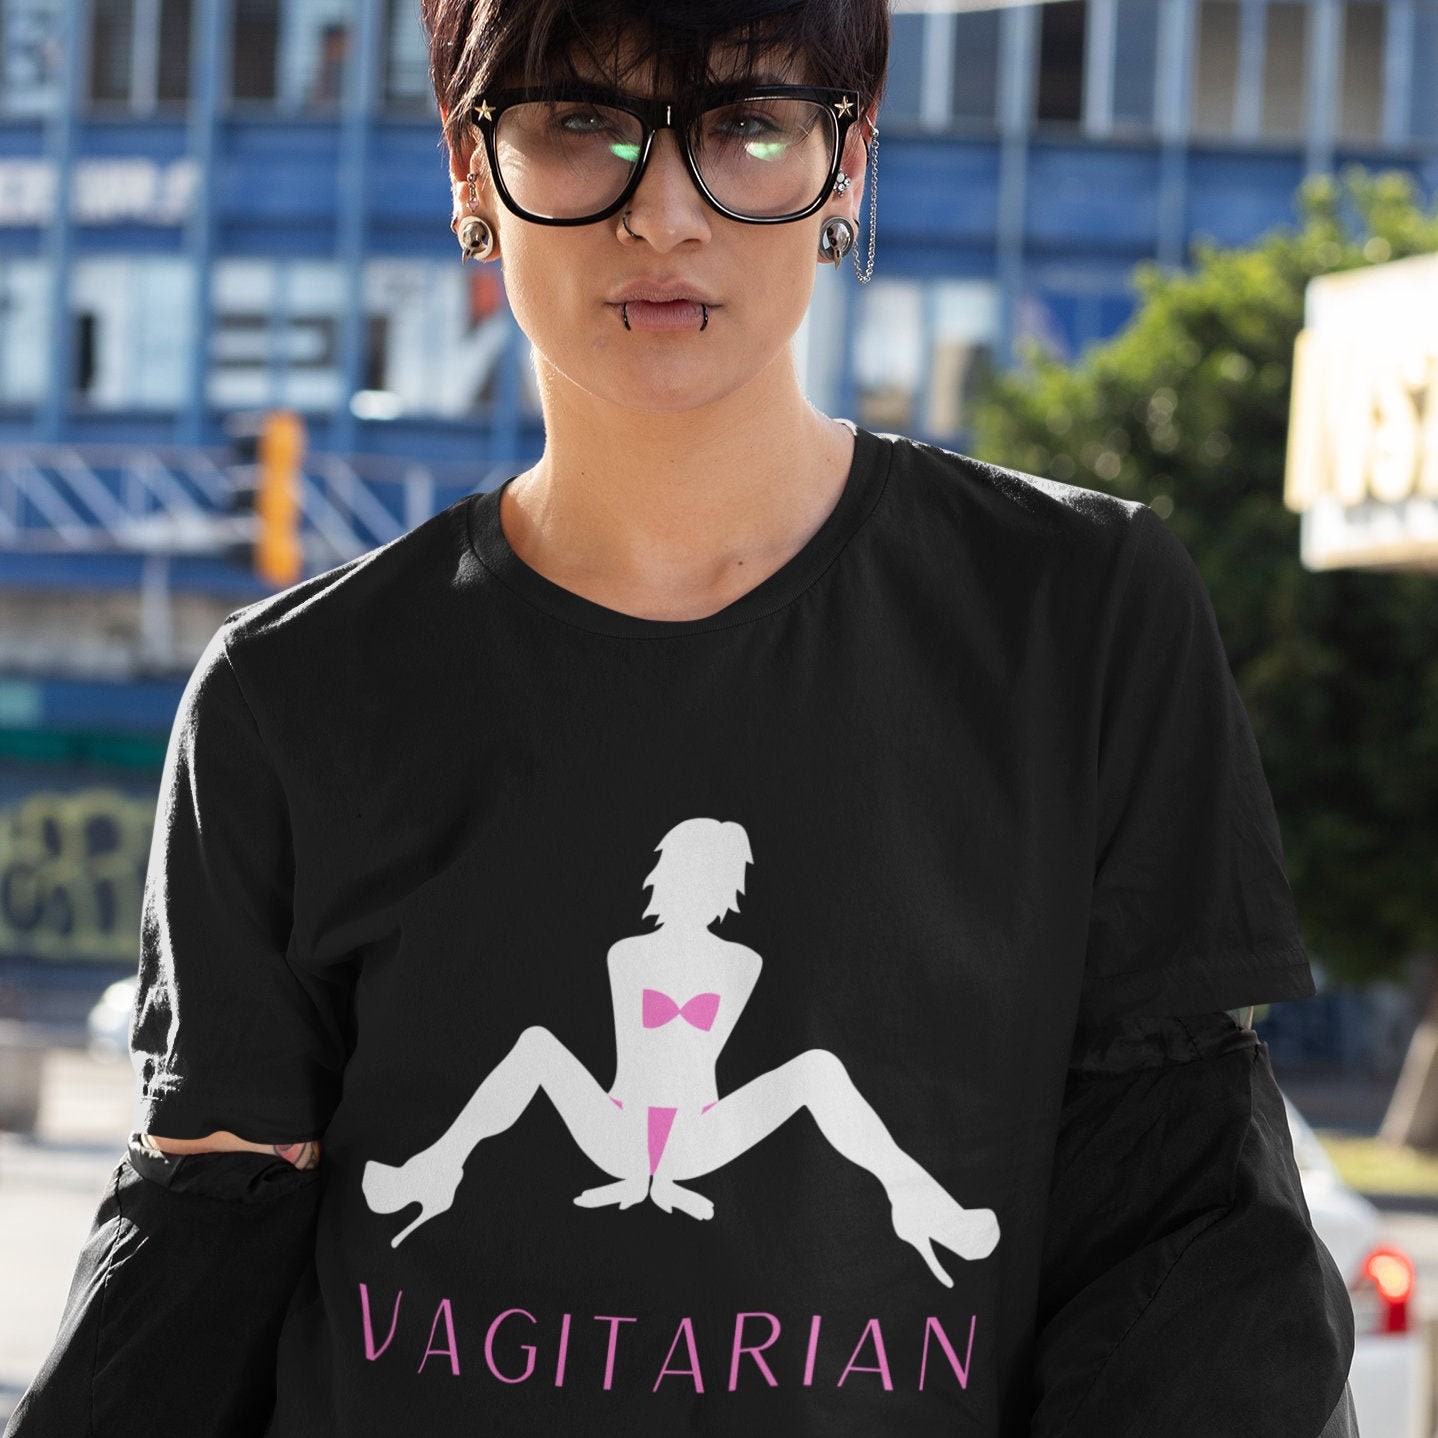 Vagitarian Funny Gay Pride Shirt Unisex Sexy Woman Symbol photo